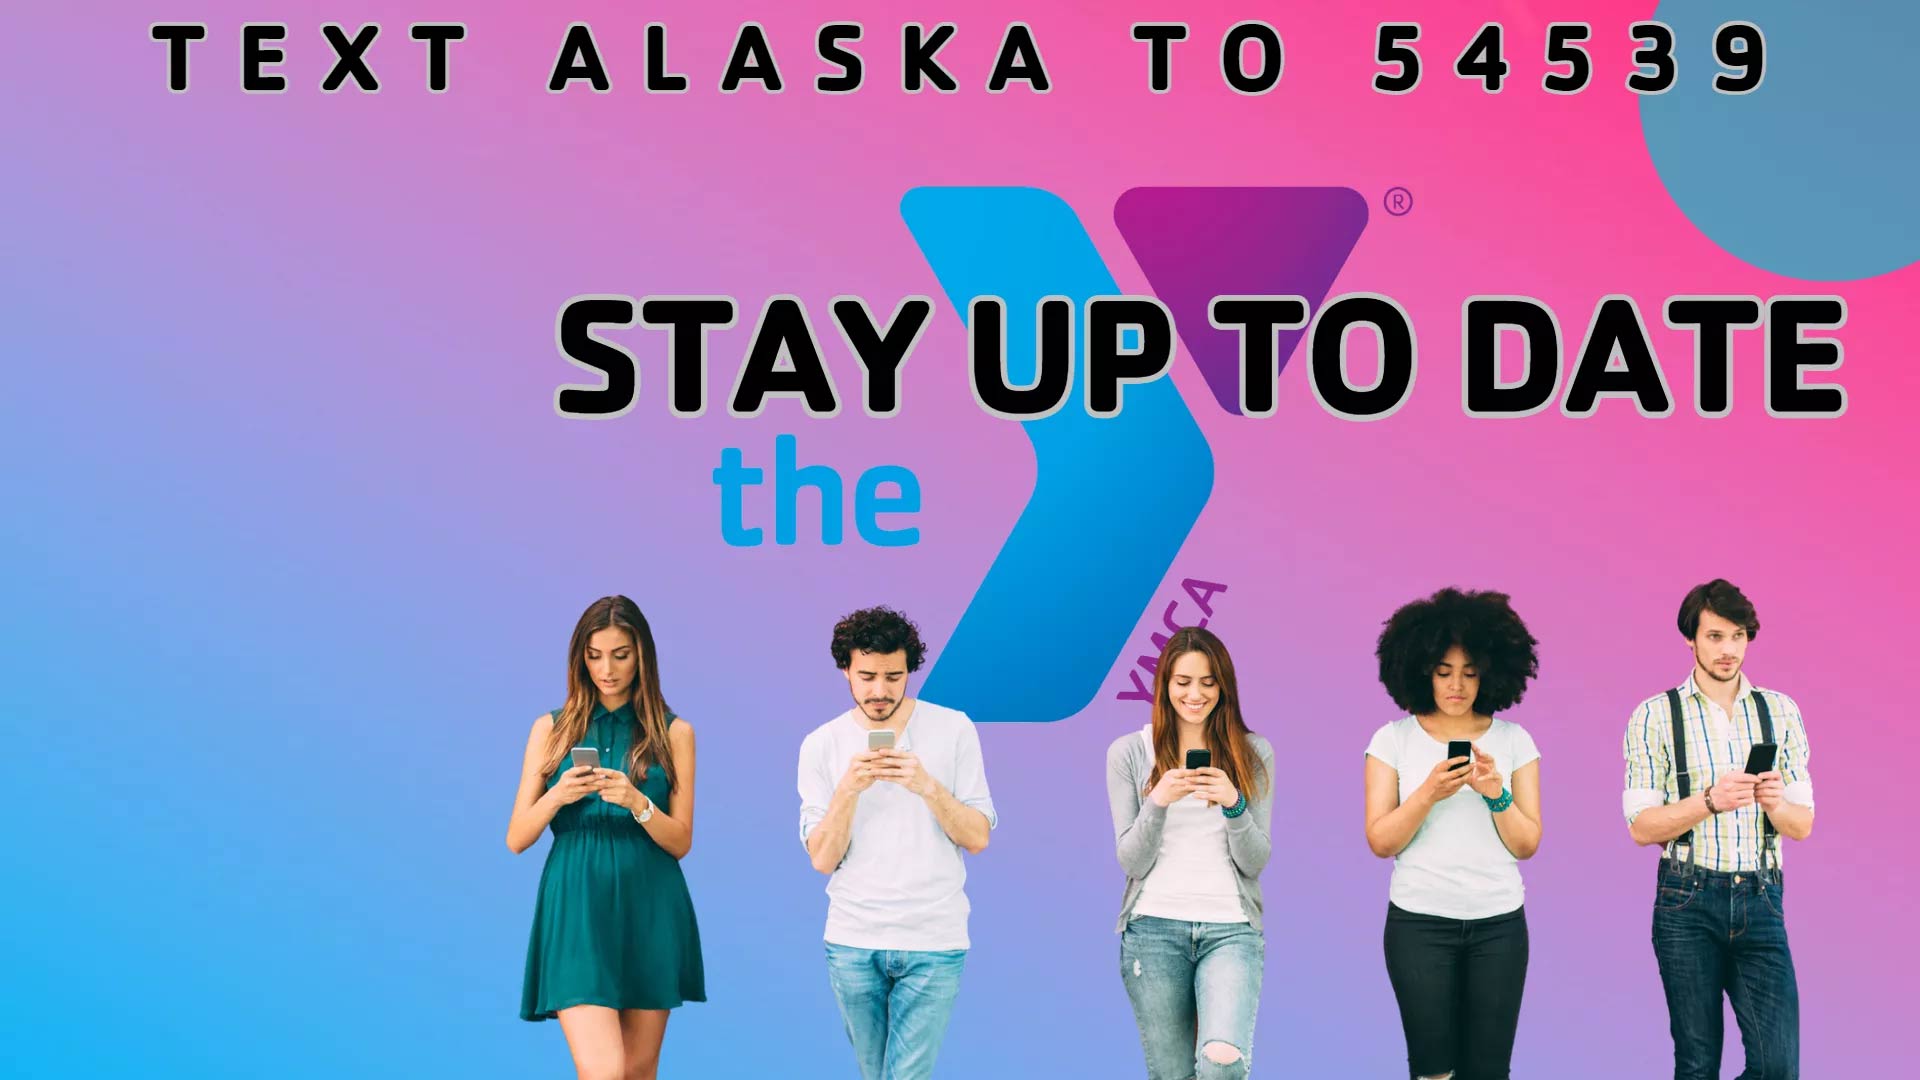 YMCA Alaska, Anchorage, Mat-Su, Fitness, Community Center, Youth Development, Healthy Living, Social Responsibility